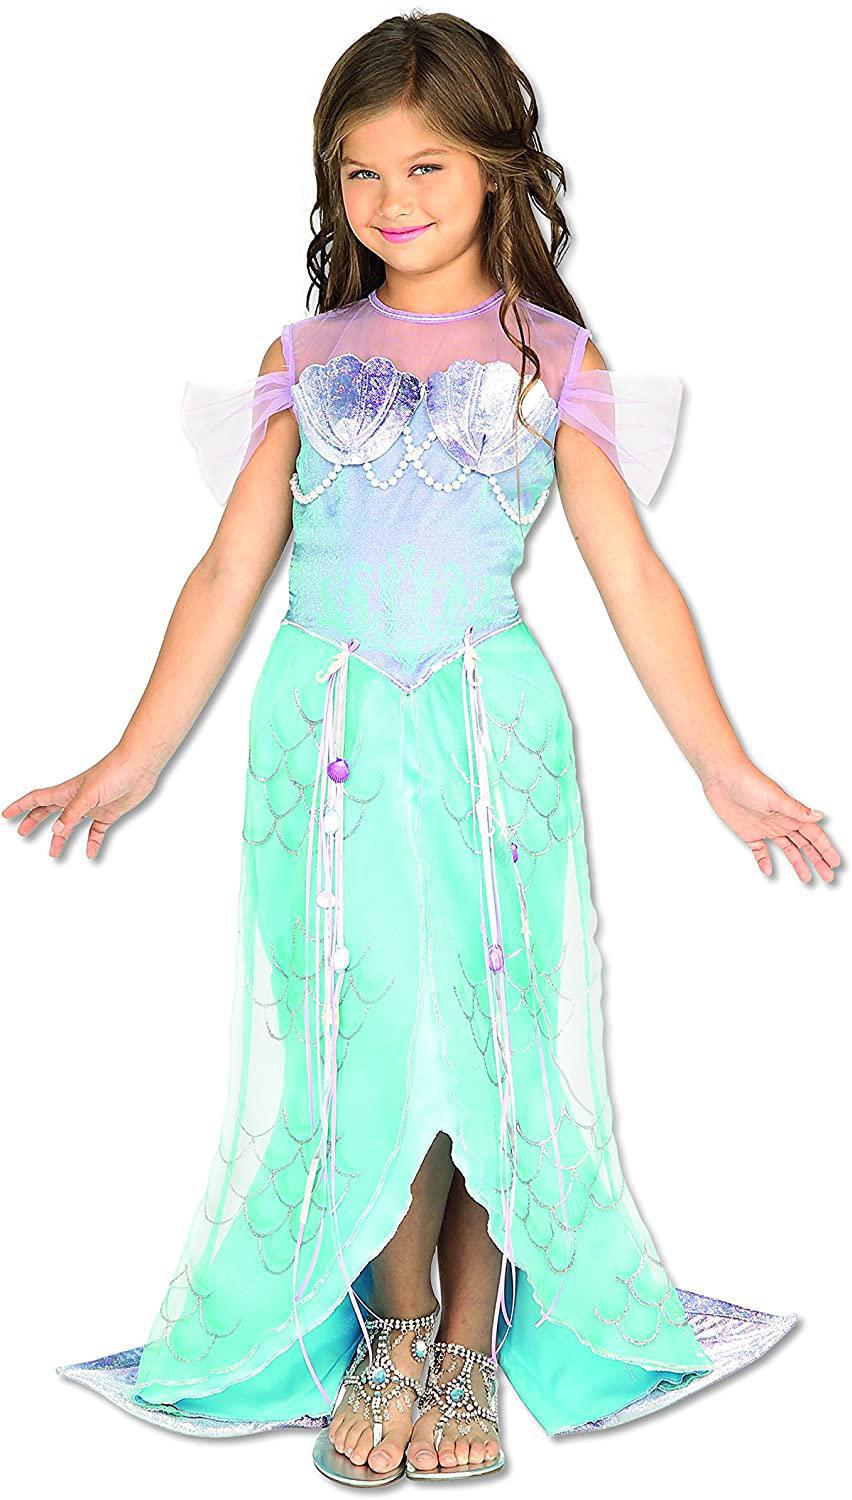 Let's Pretend Child's Deluxe Mermaid Kids Costume - Mermaid Dress with Tale